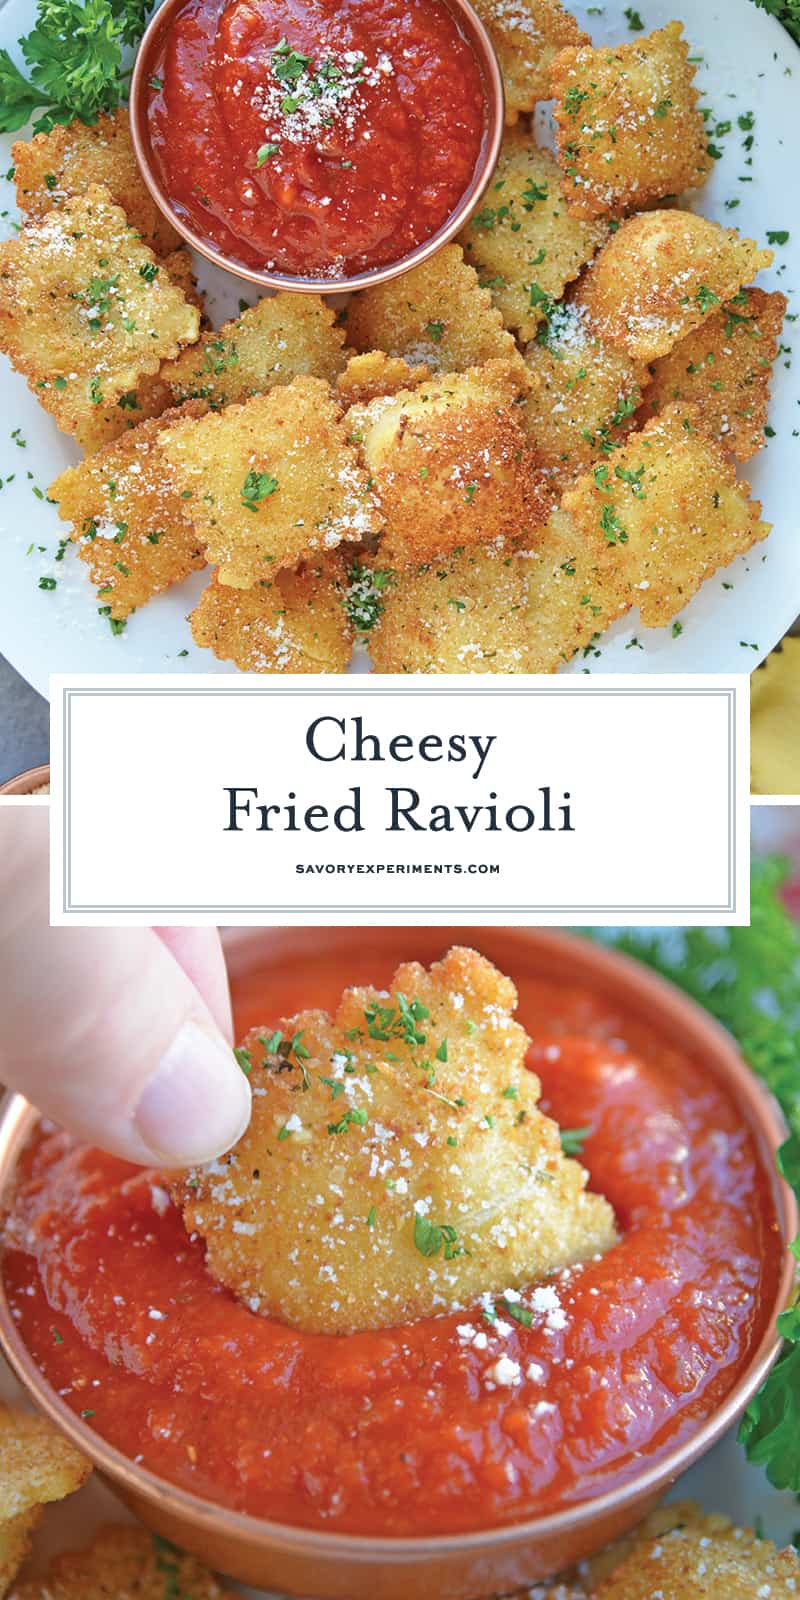 Fried Ravioli with Marinara Sauce for Pinterest